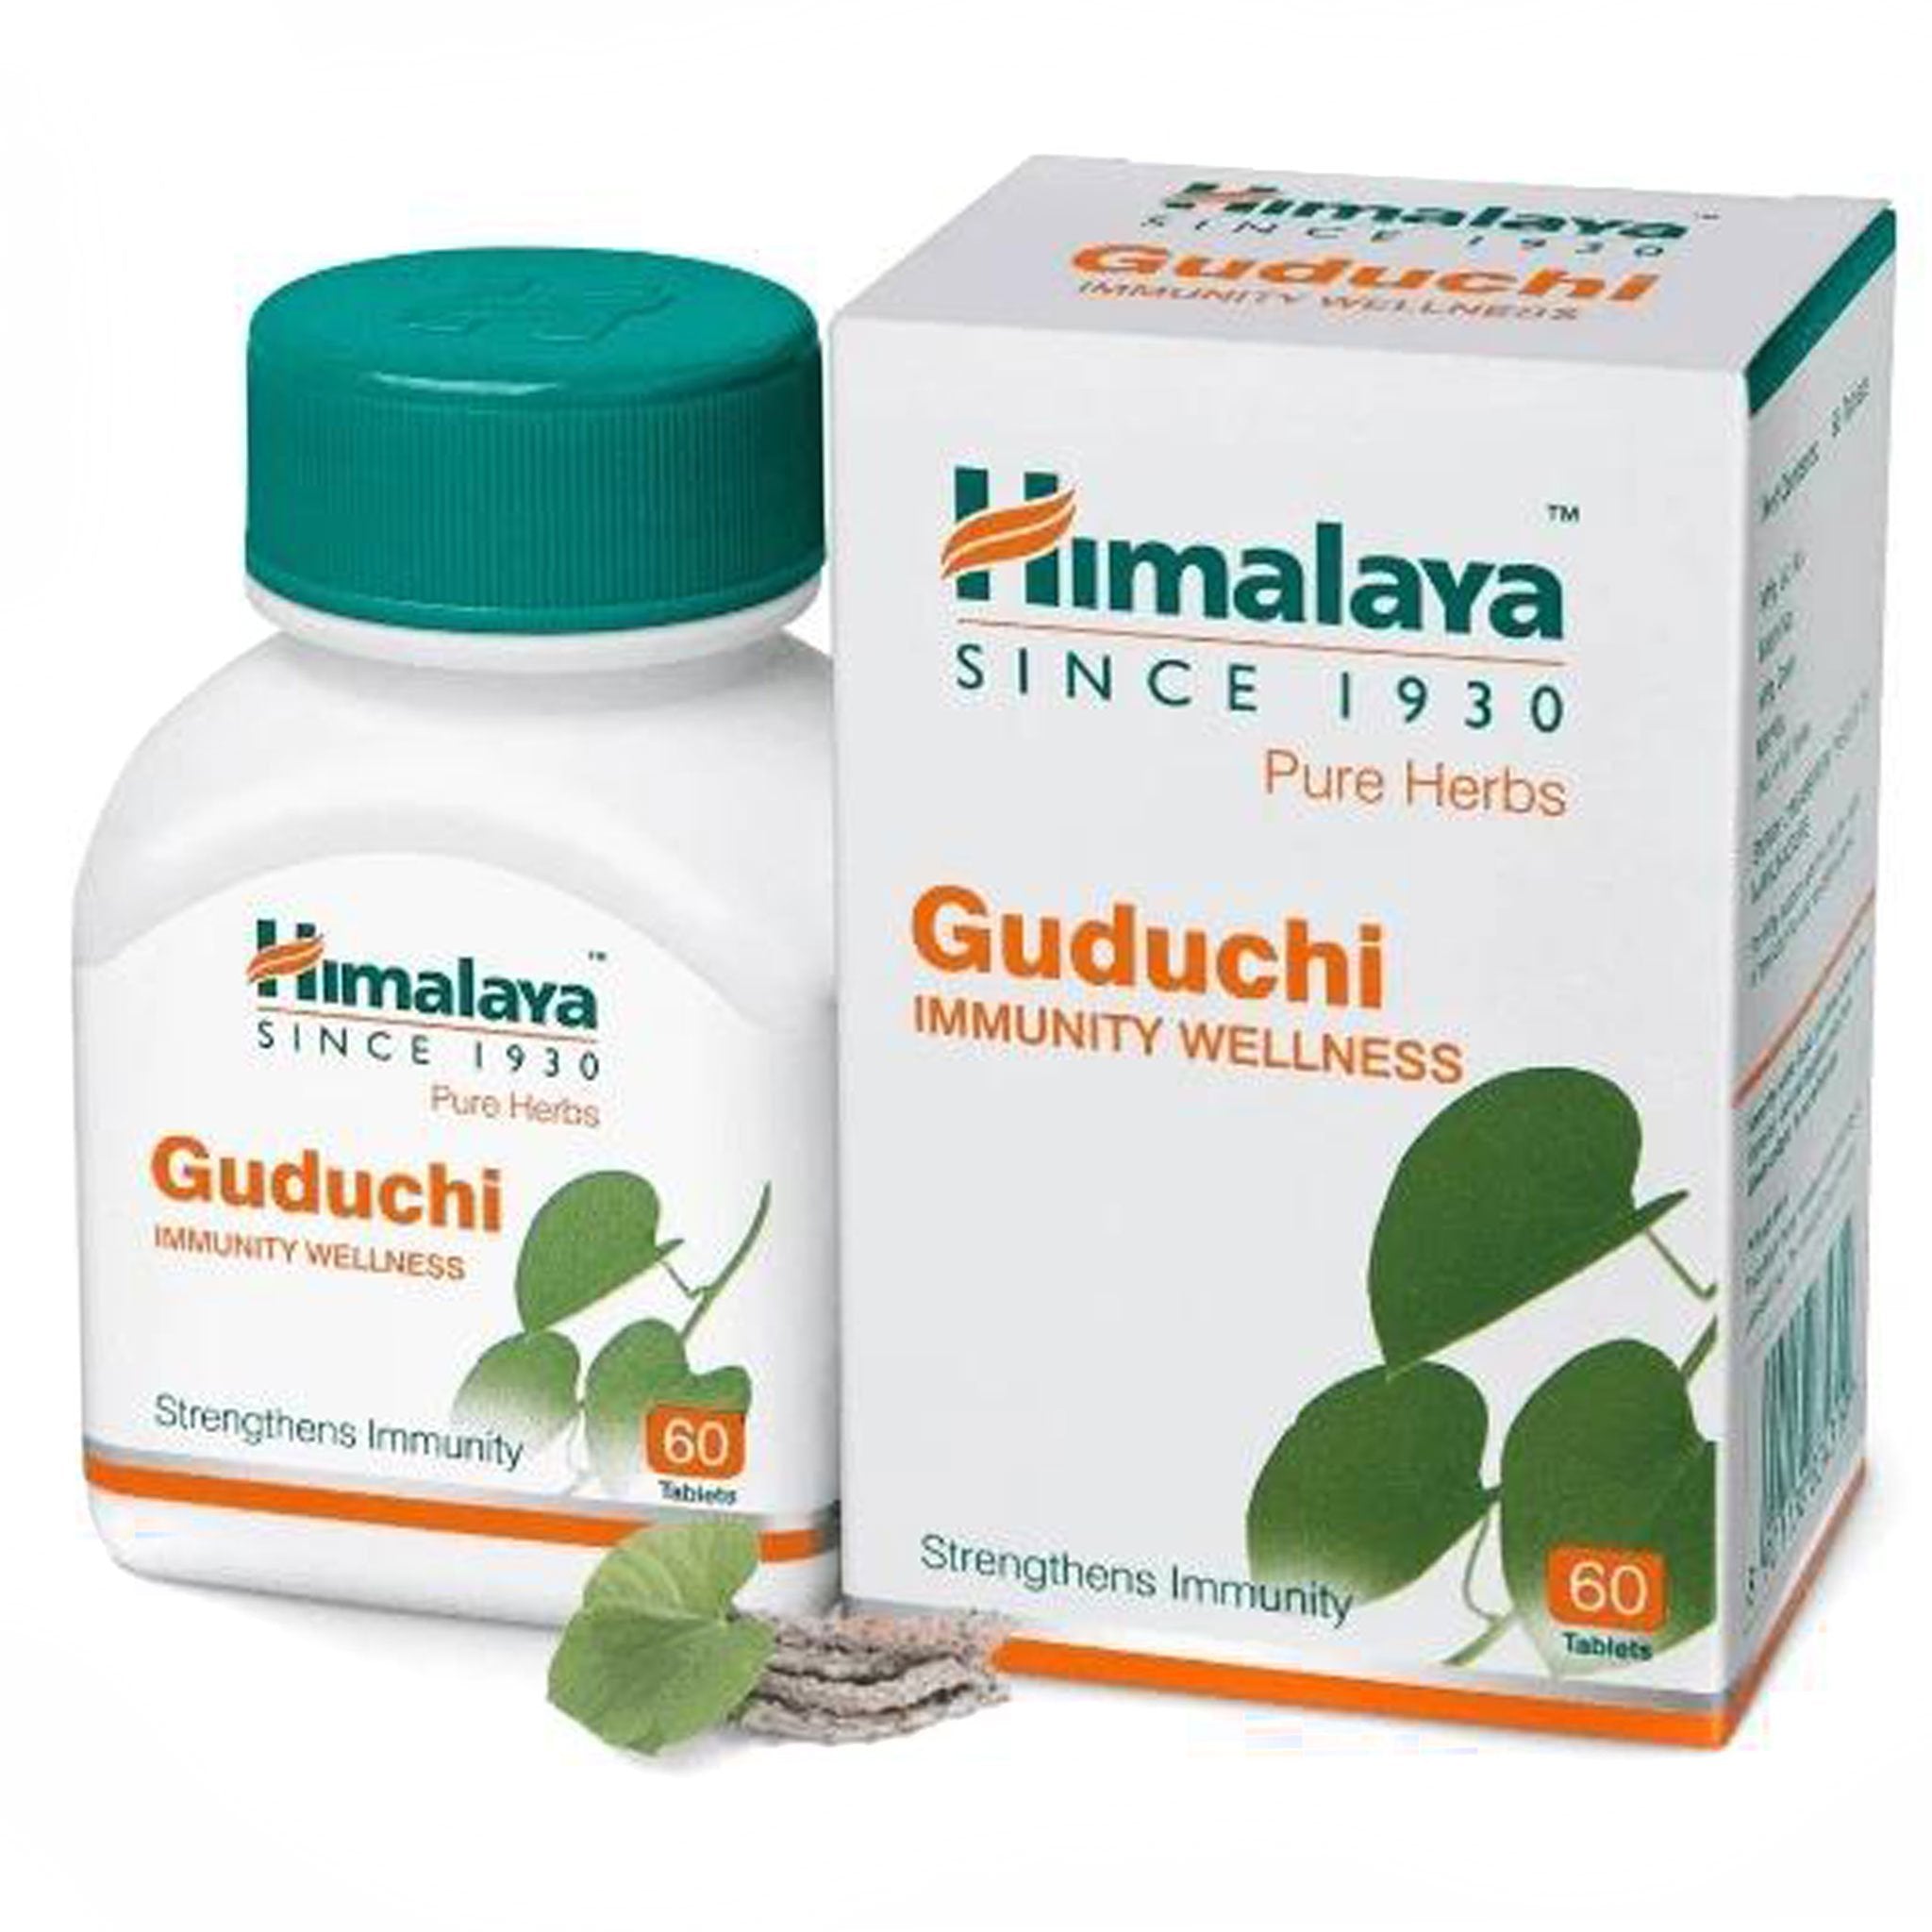 Himalaya Guduchi Pure Herbs 60 Tablets Value Pack of 2 